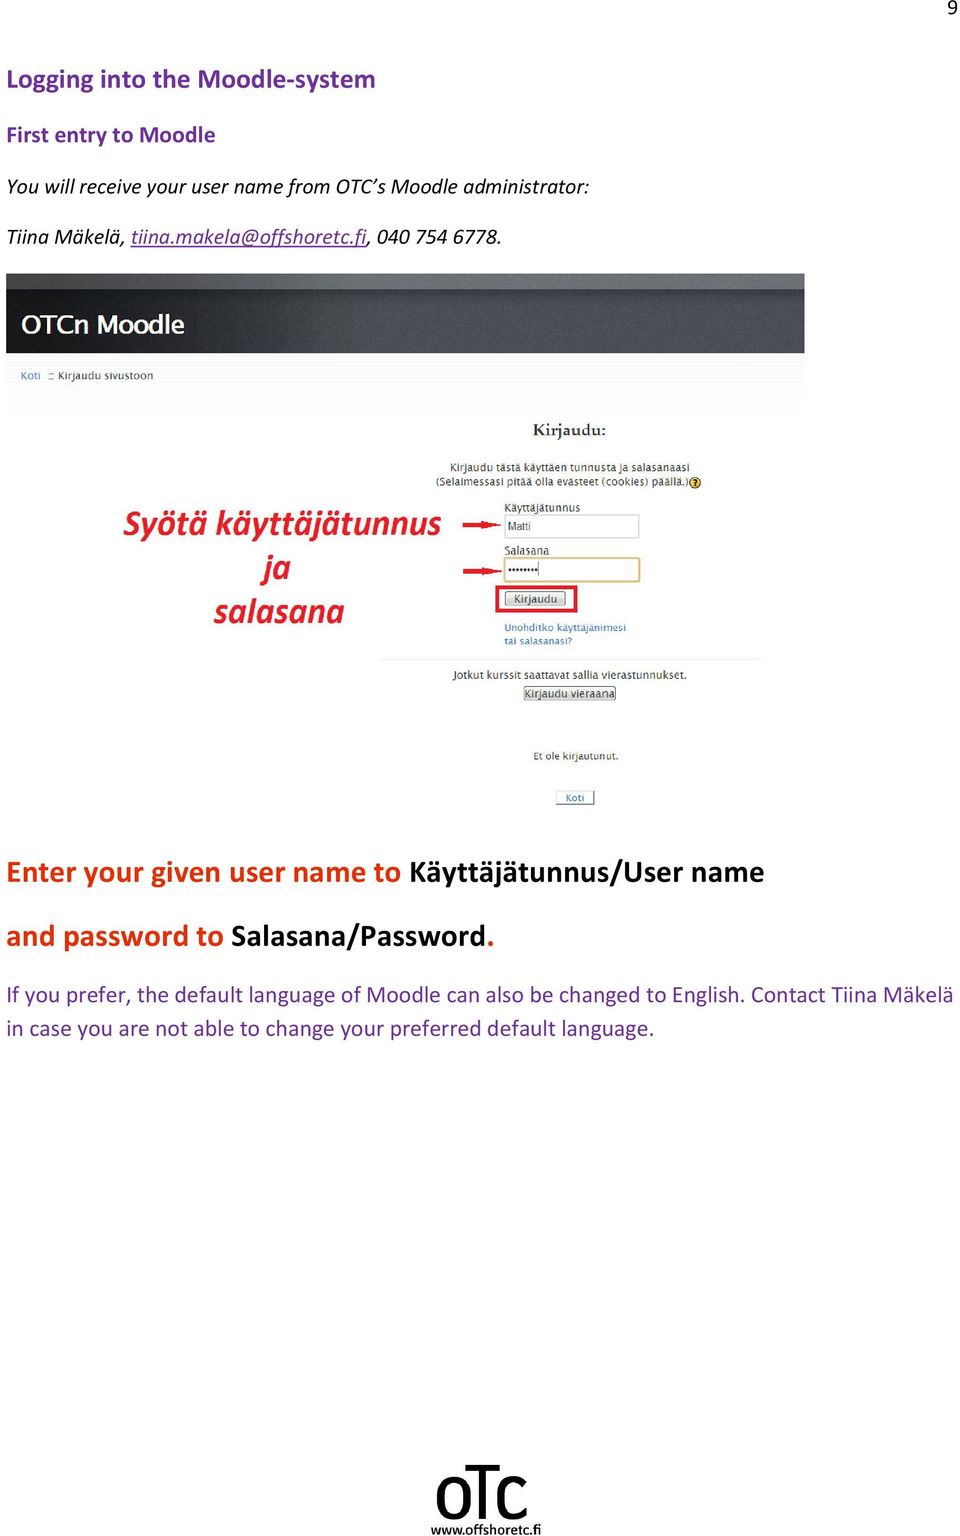 Enter your given user name to Käyttäjätunnus/User name and password to Salasana/Password.